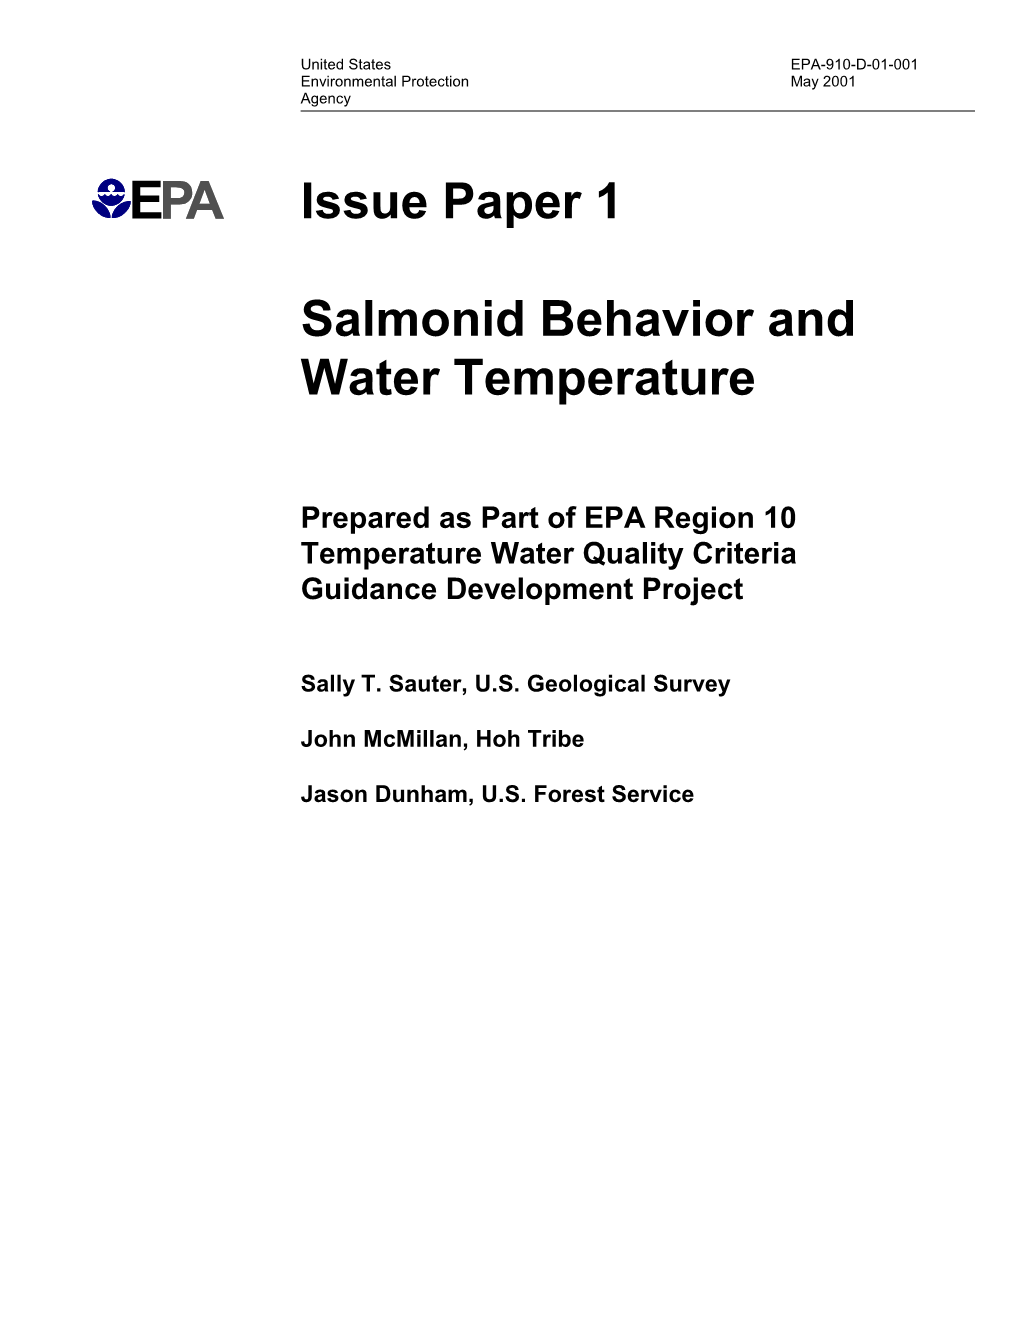 Issue Paper 1: Salmonid Behavior and Water Temperature